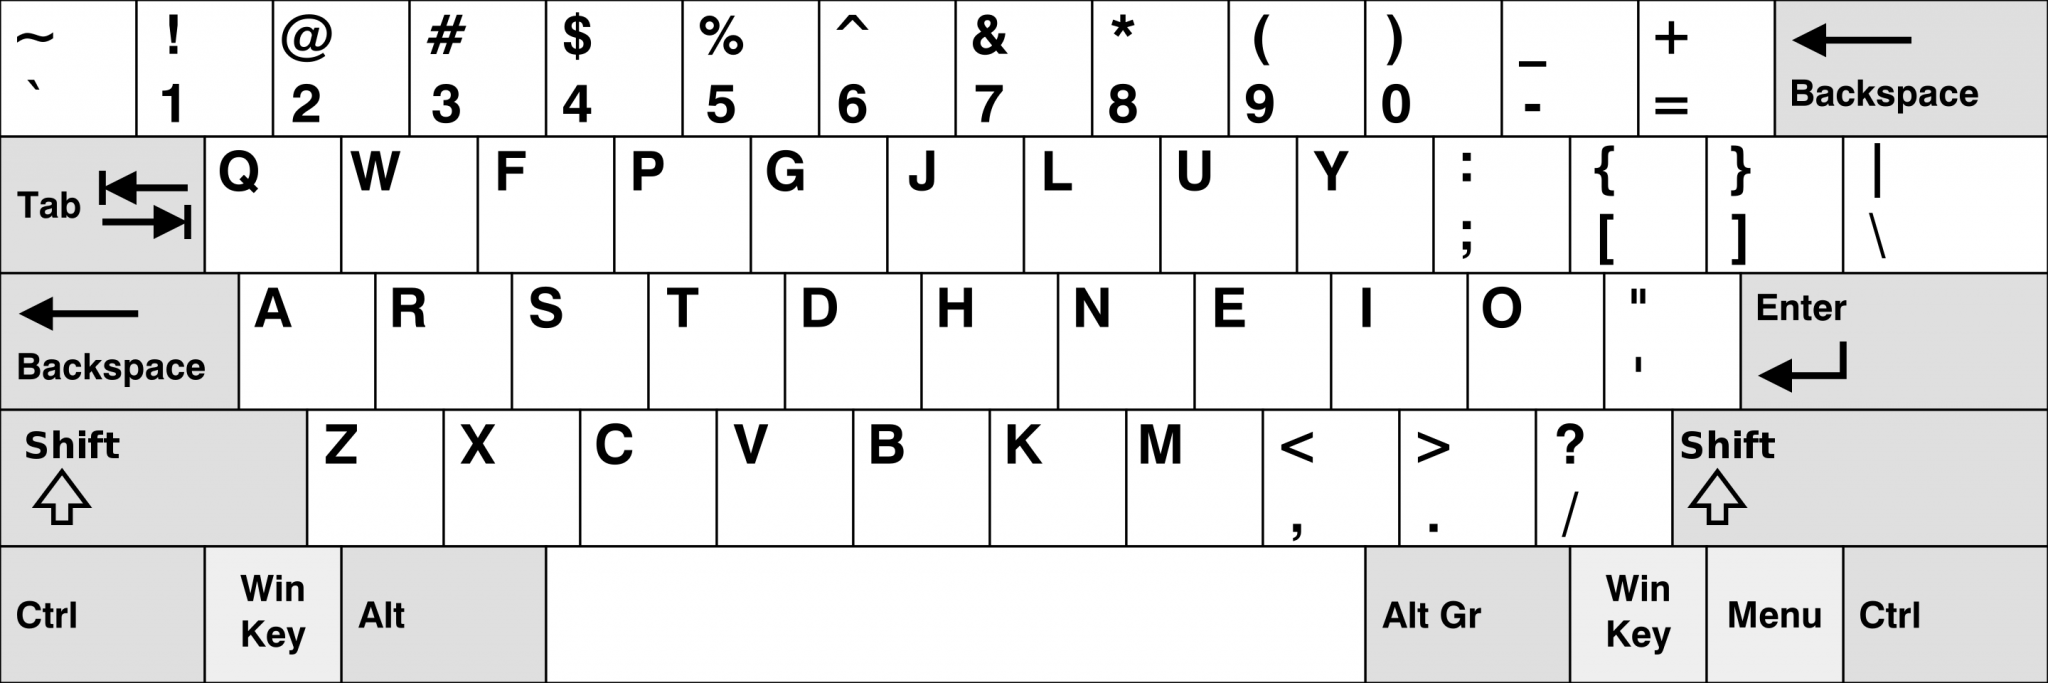 Coleman keyboard layout - kunibht